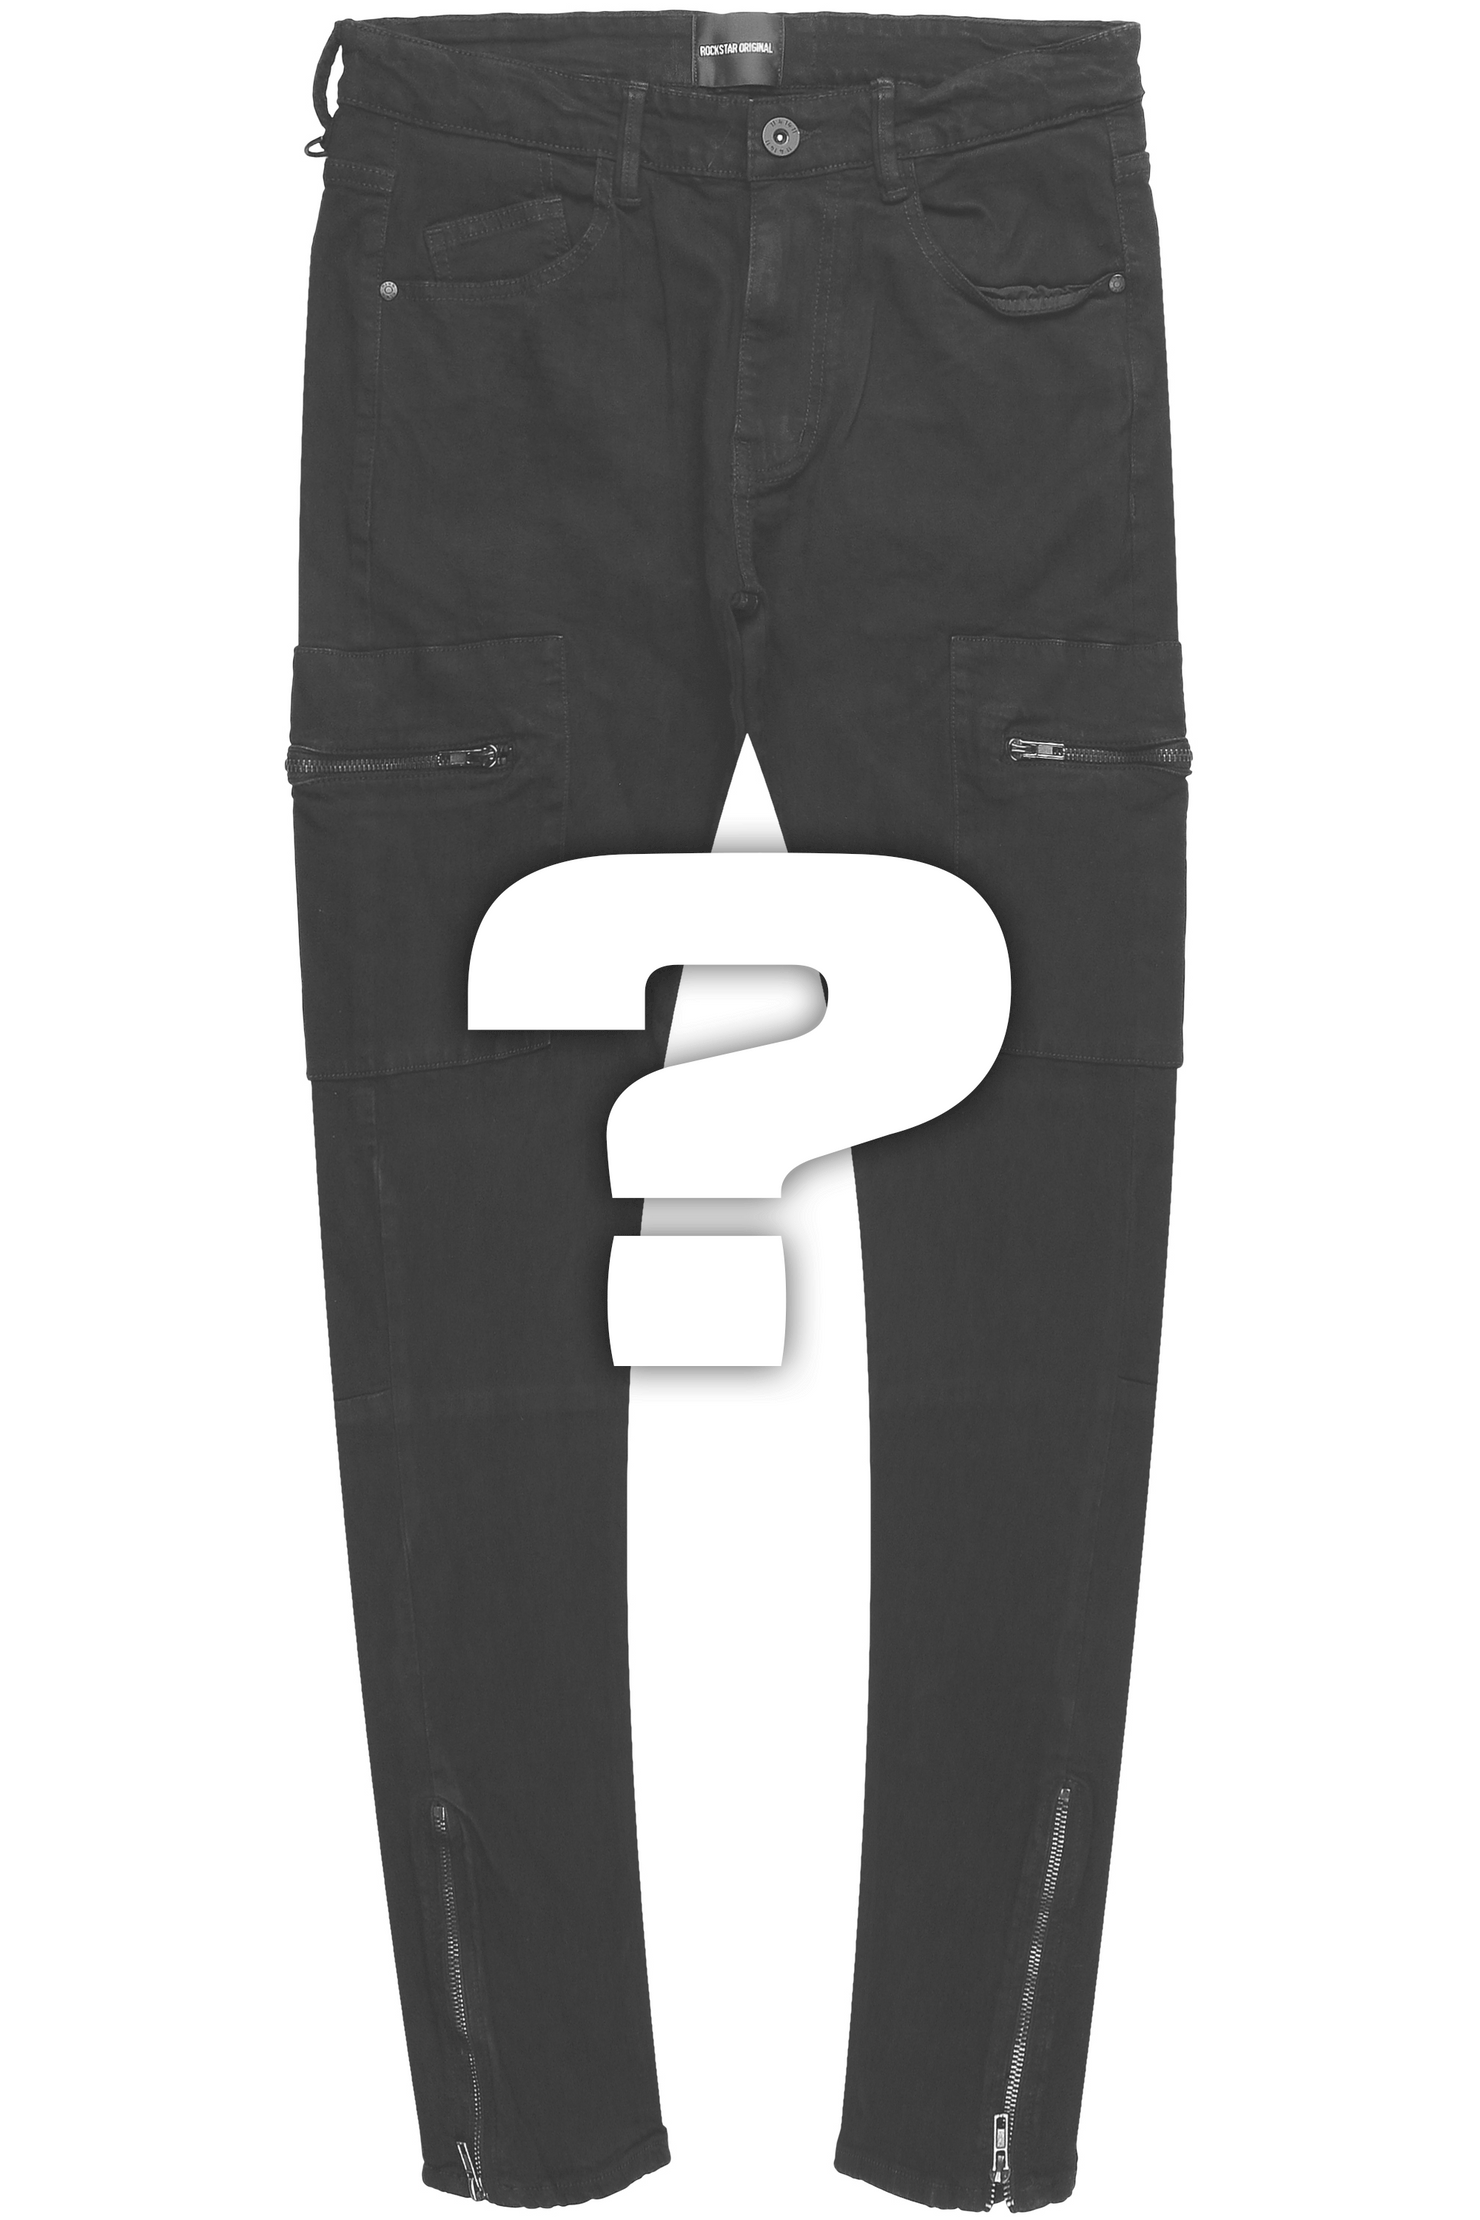 Mystery Jeans– Rockstar Original